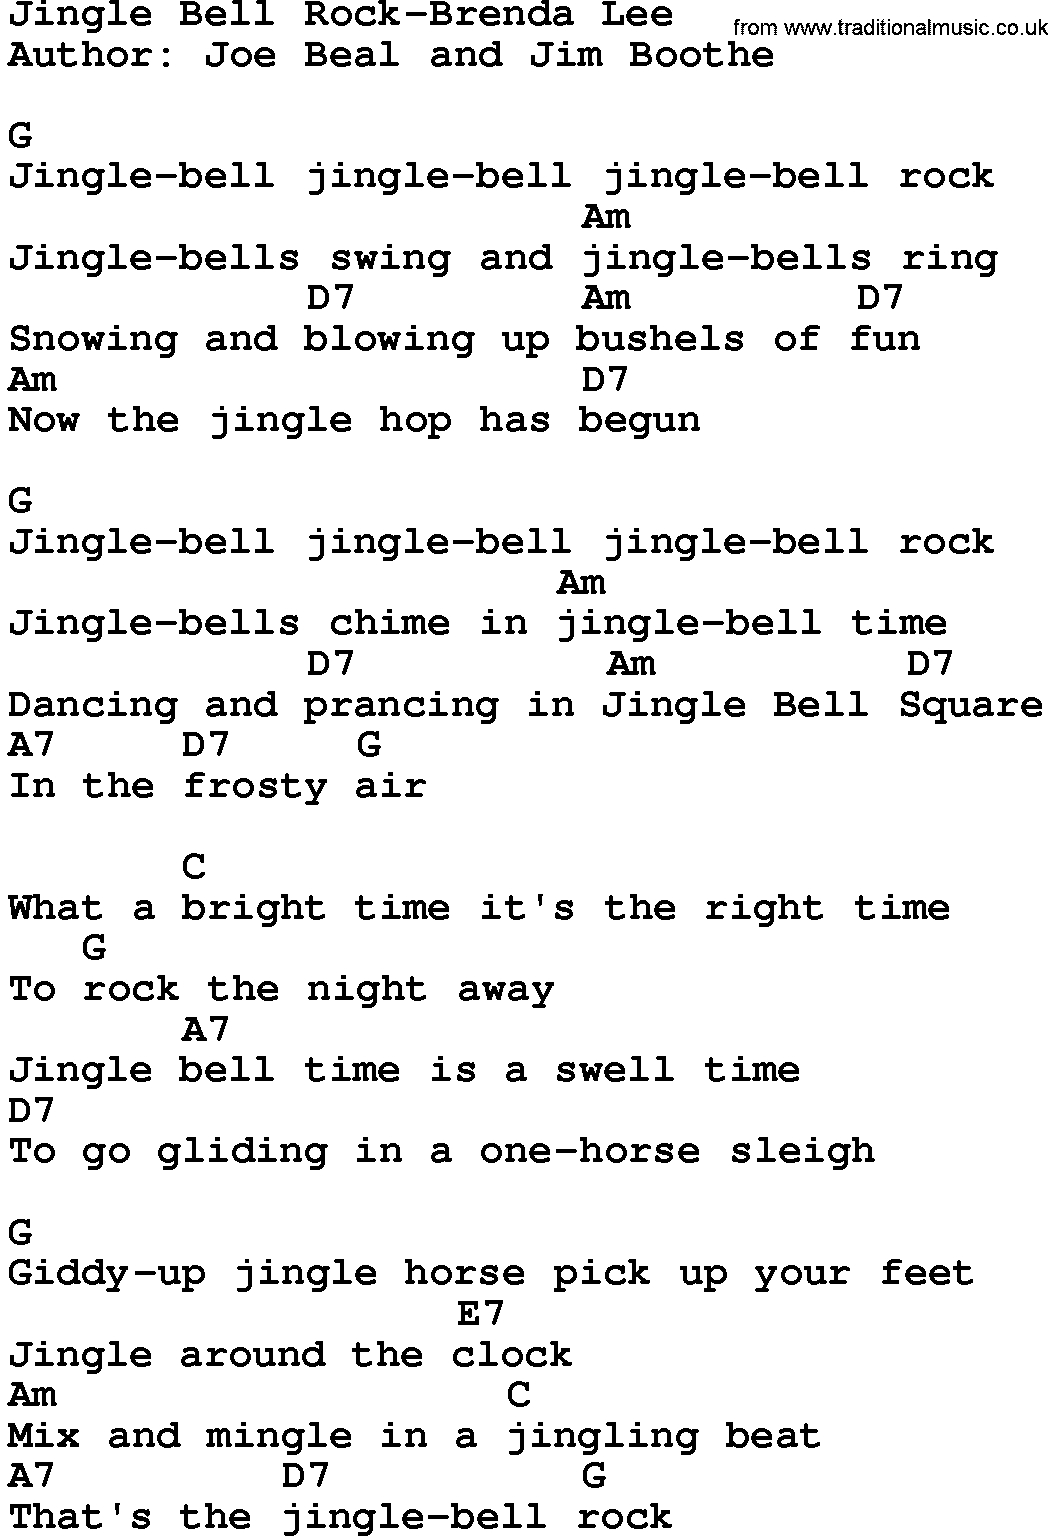 Jingle Bell Rock Chords Country Musicjingle Bell Rock Brenda Lee Lyrics And Chords